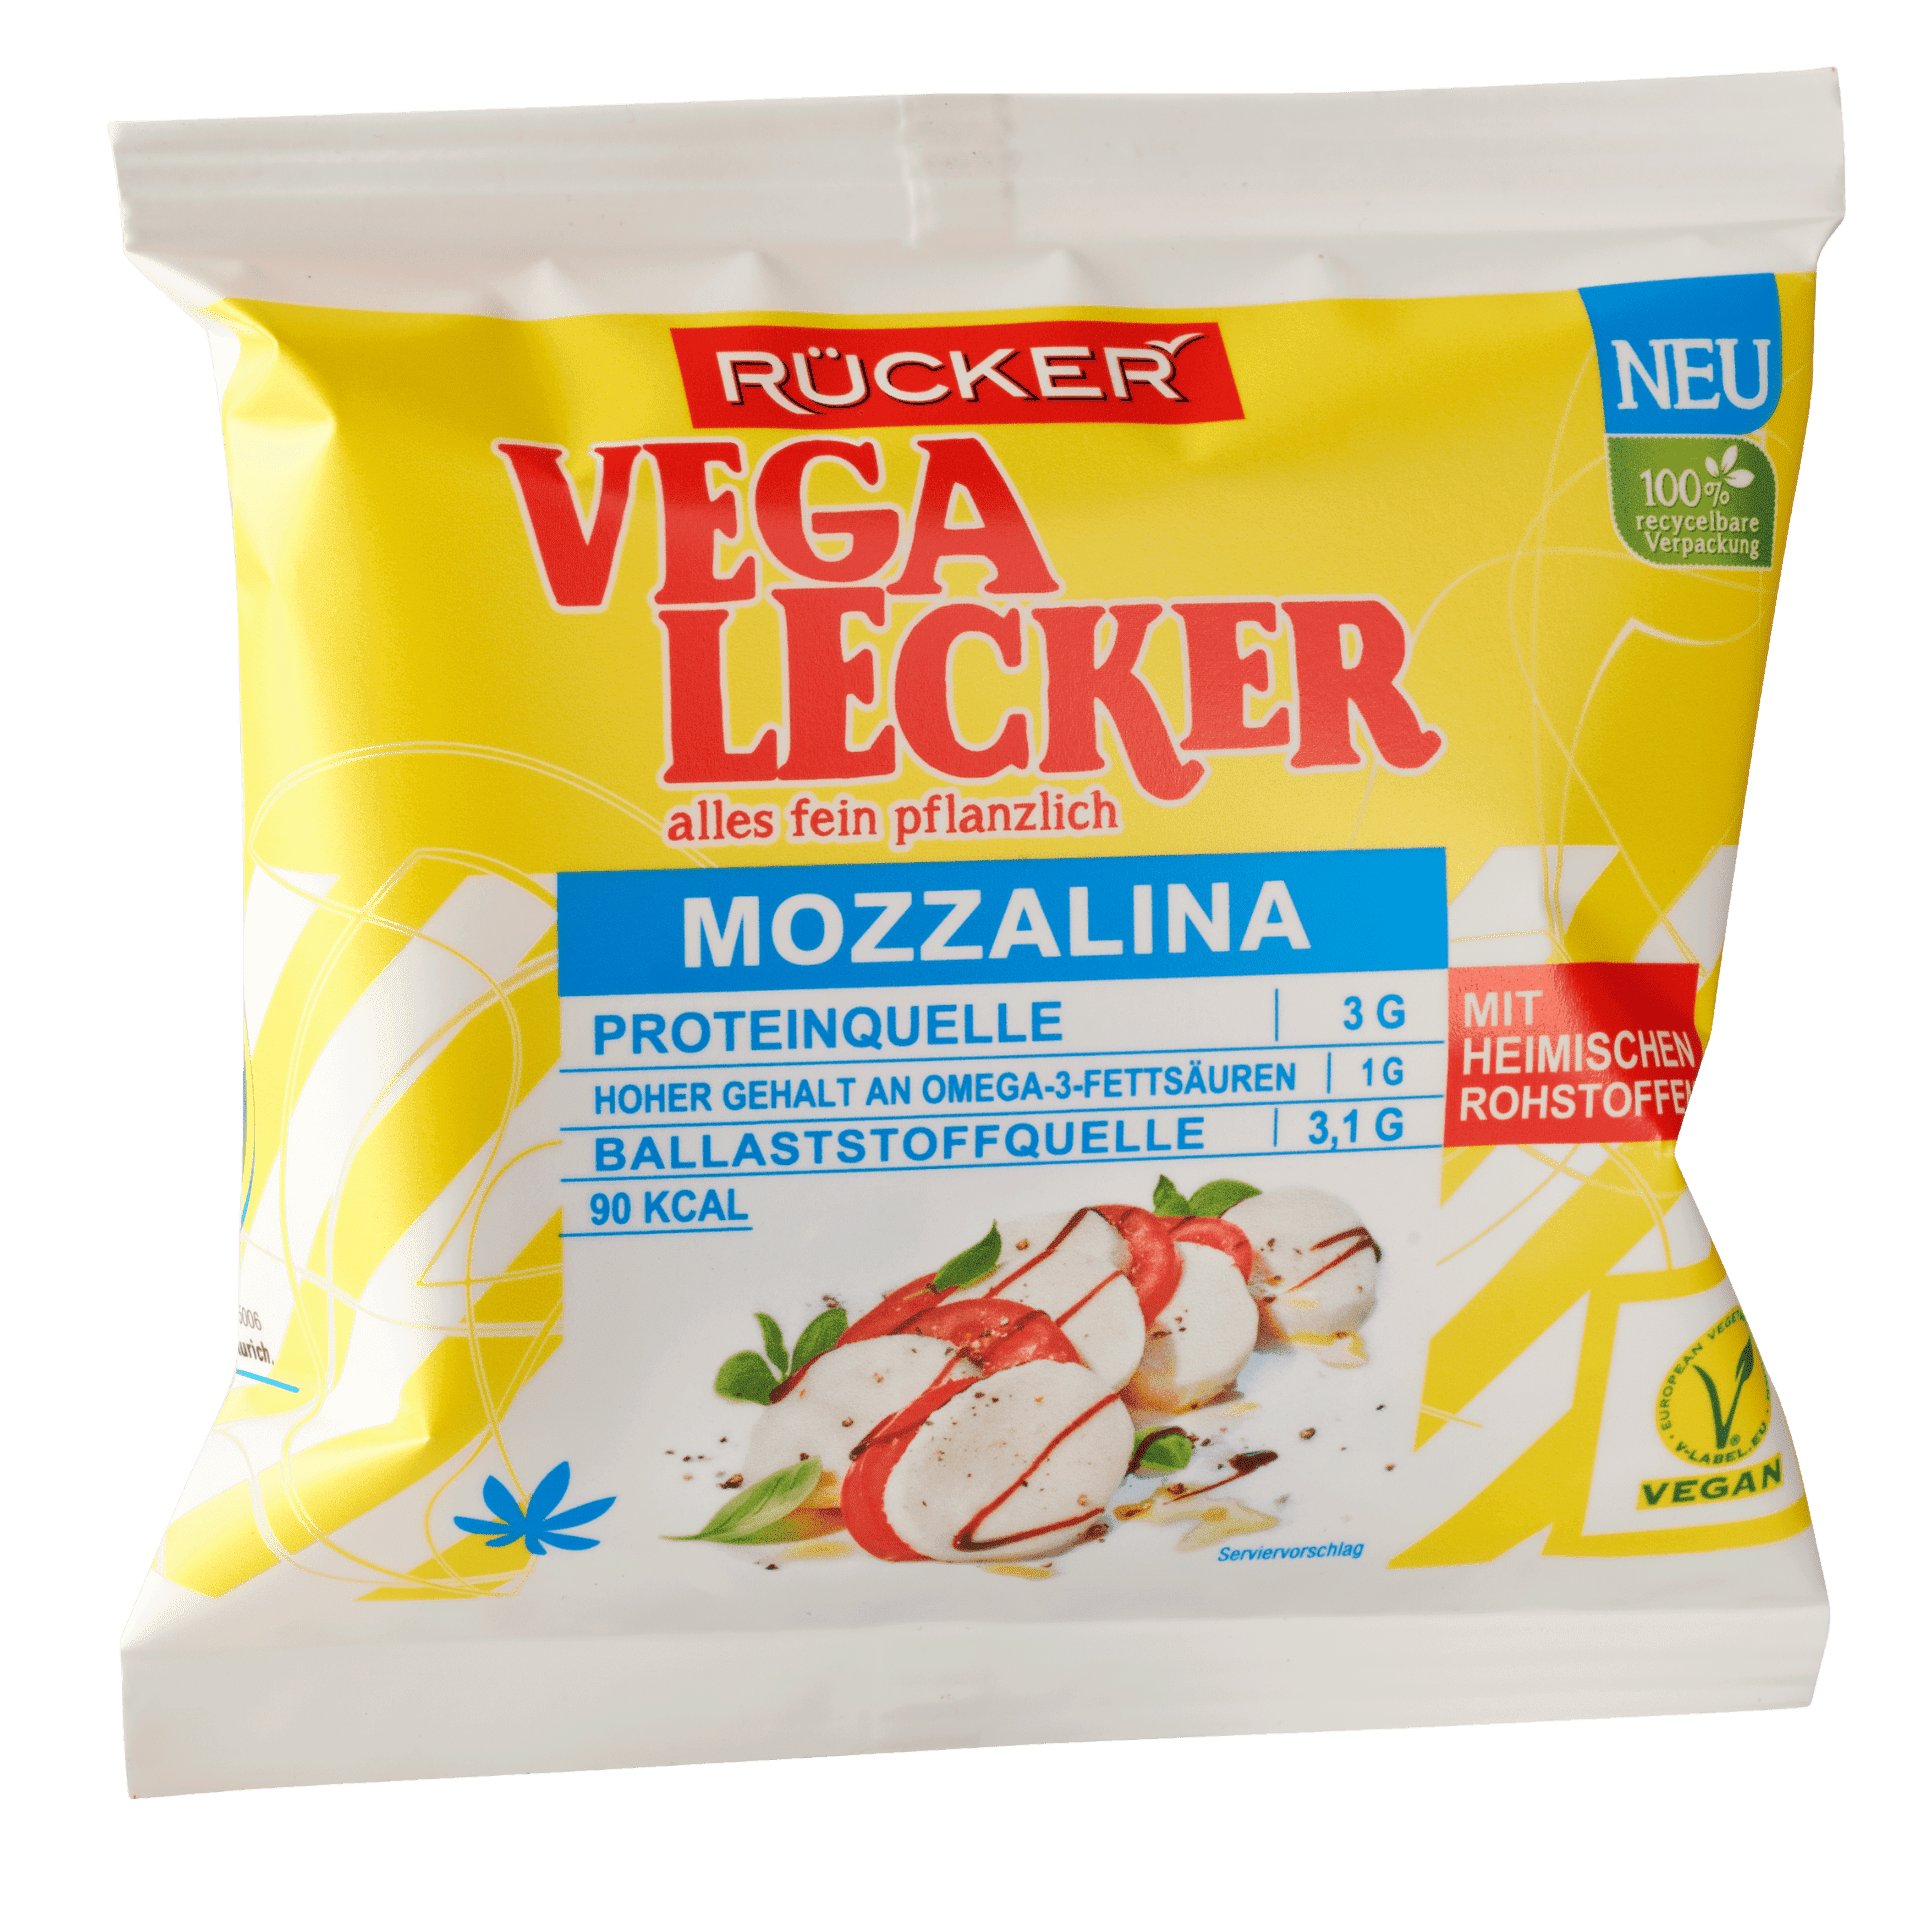 Mozzalina - veganer Mozzarella